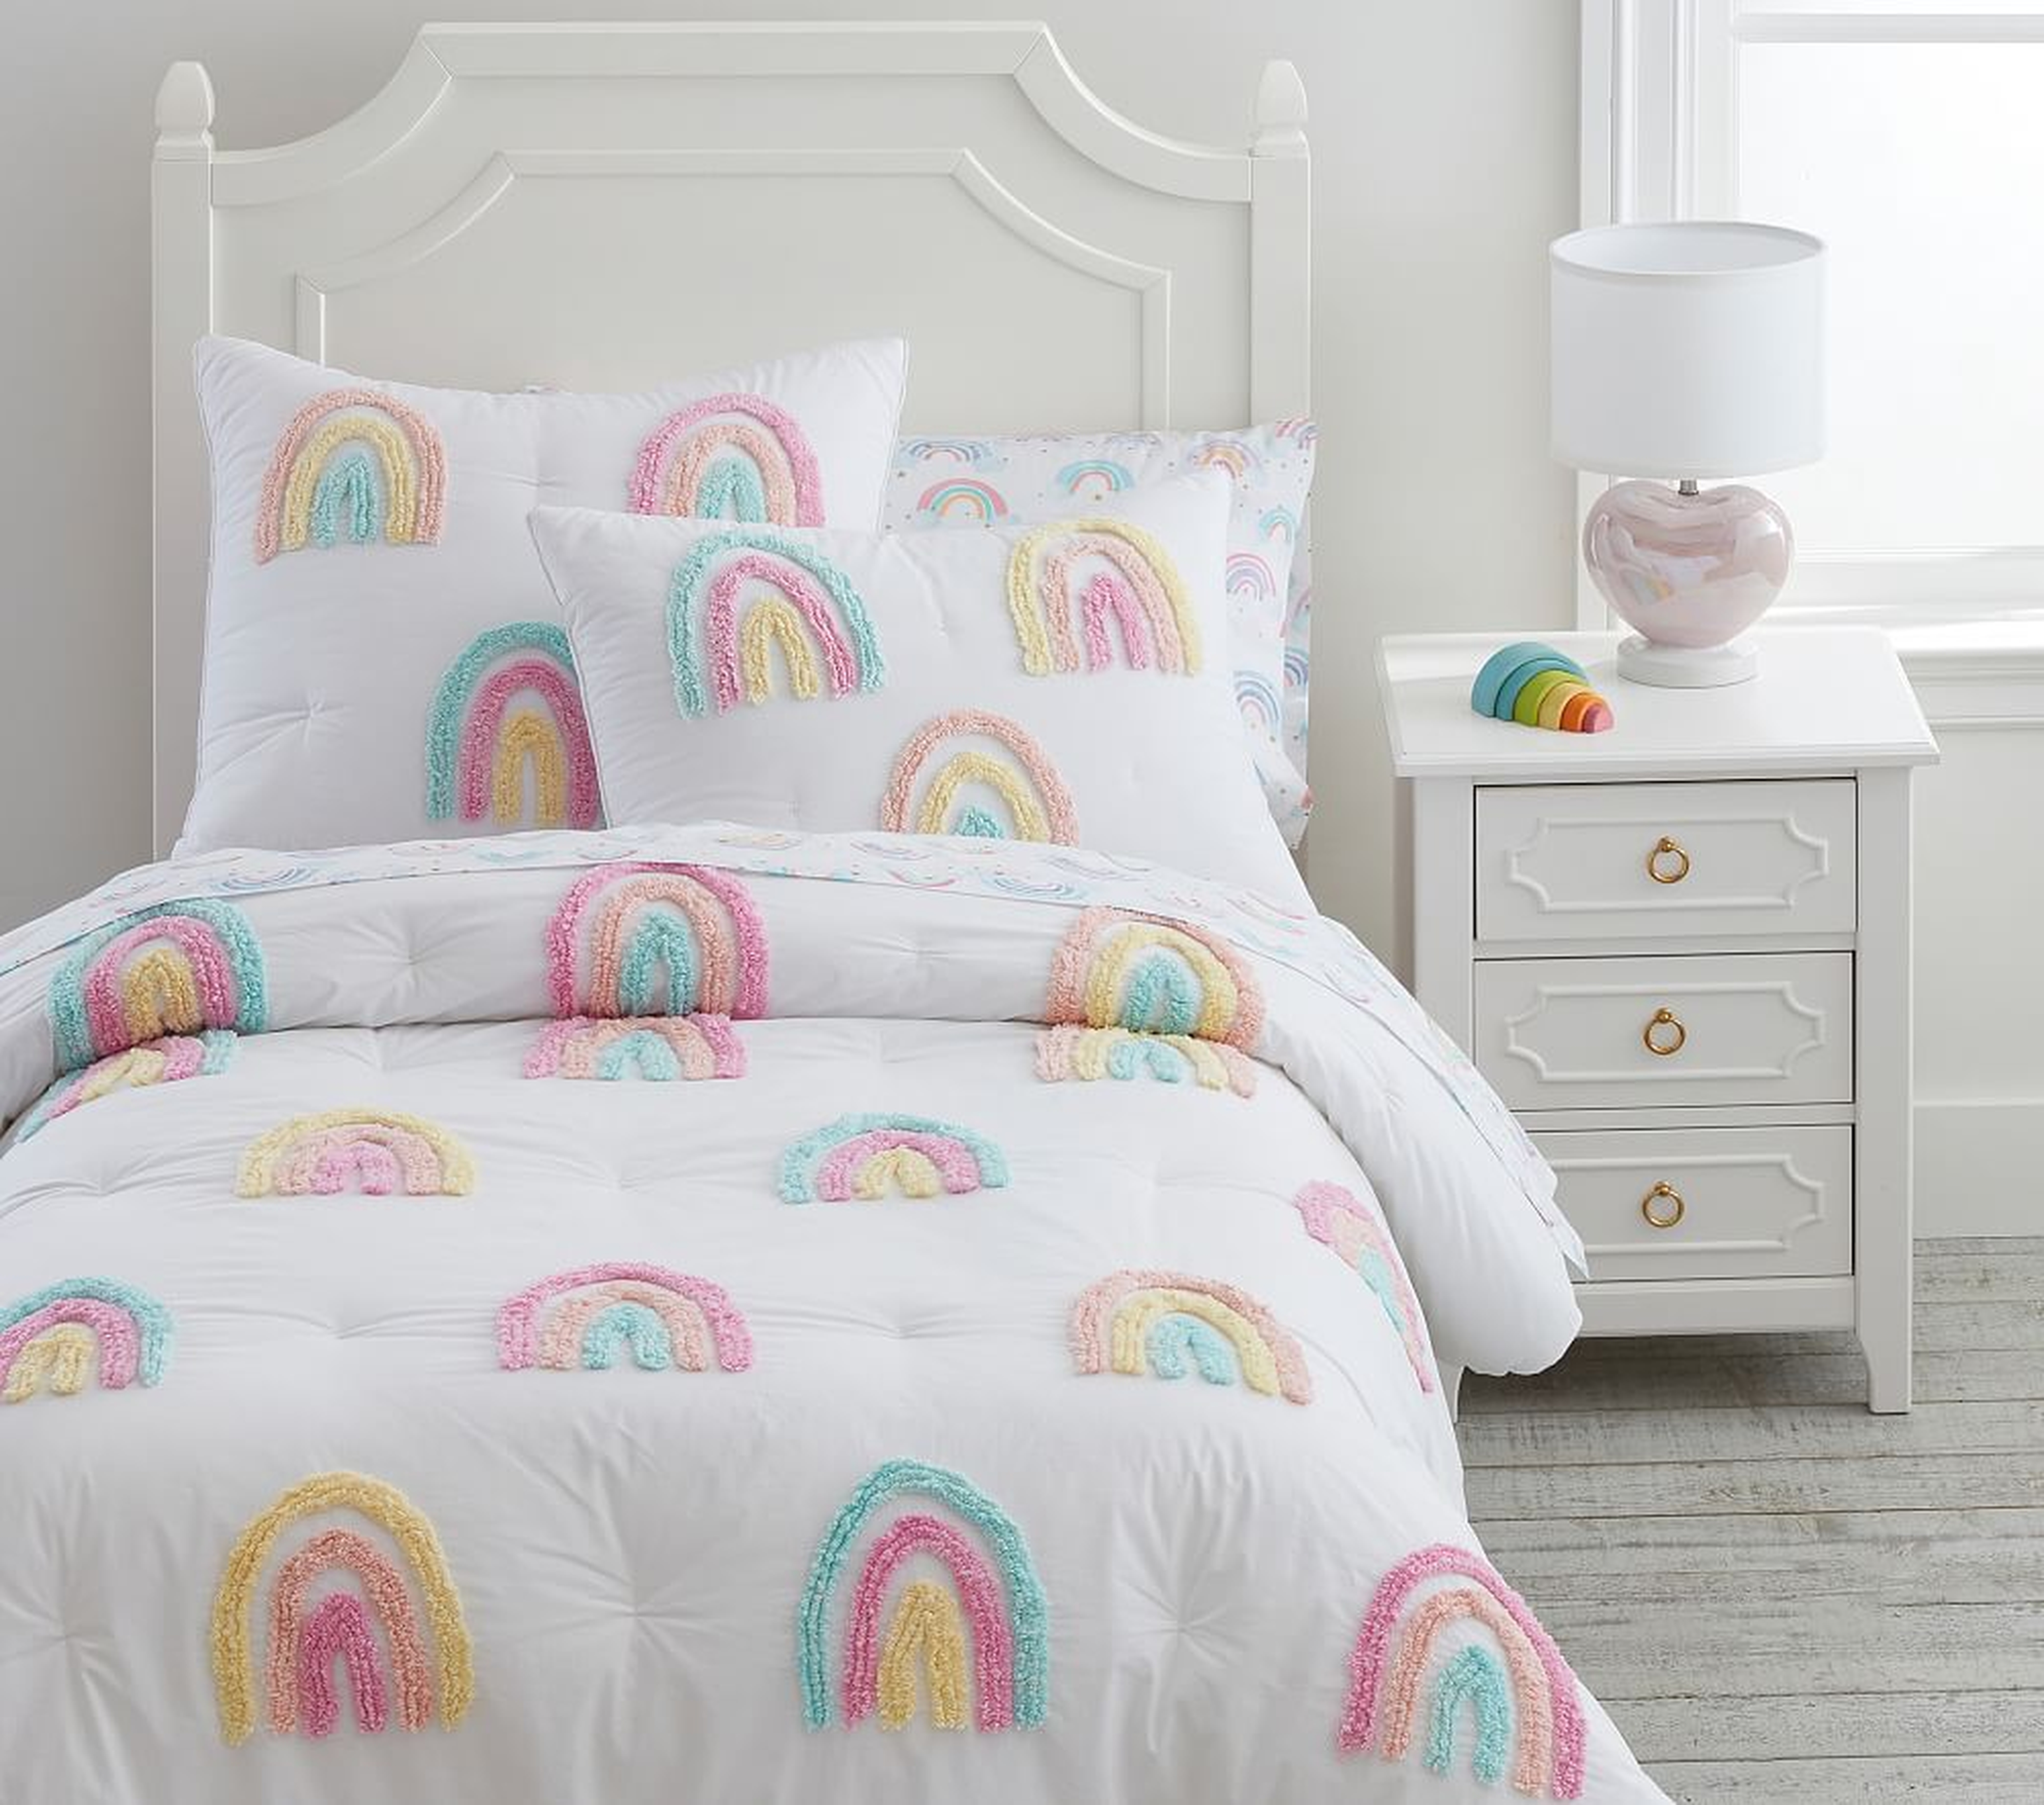 Candlewick Rainbow Comforter, Full/Queen, Multi - Pottery Barn Kids